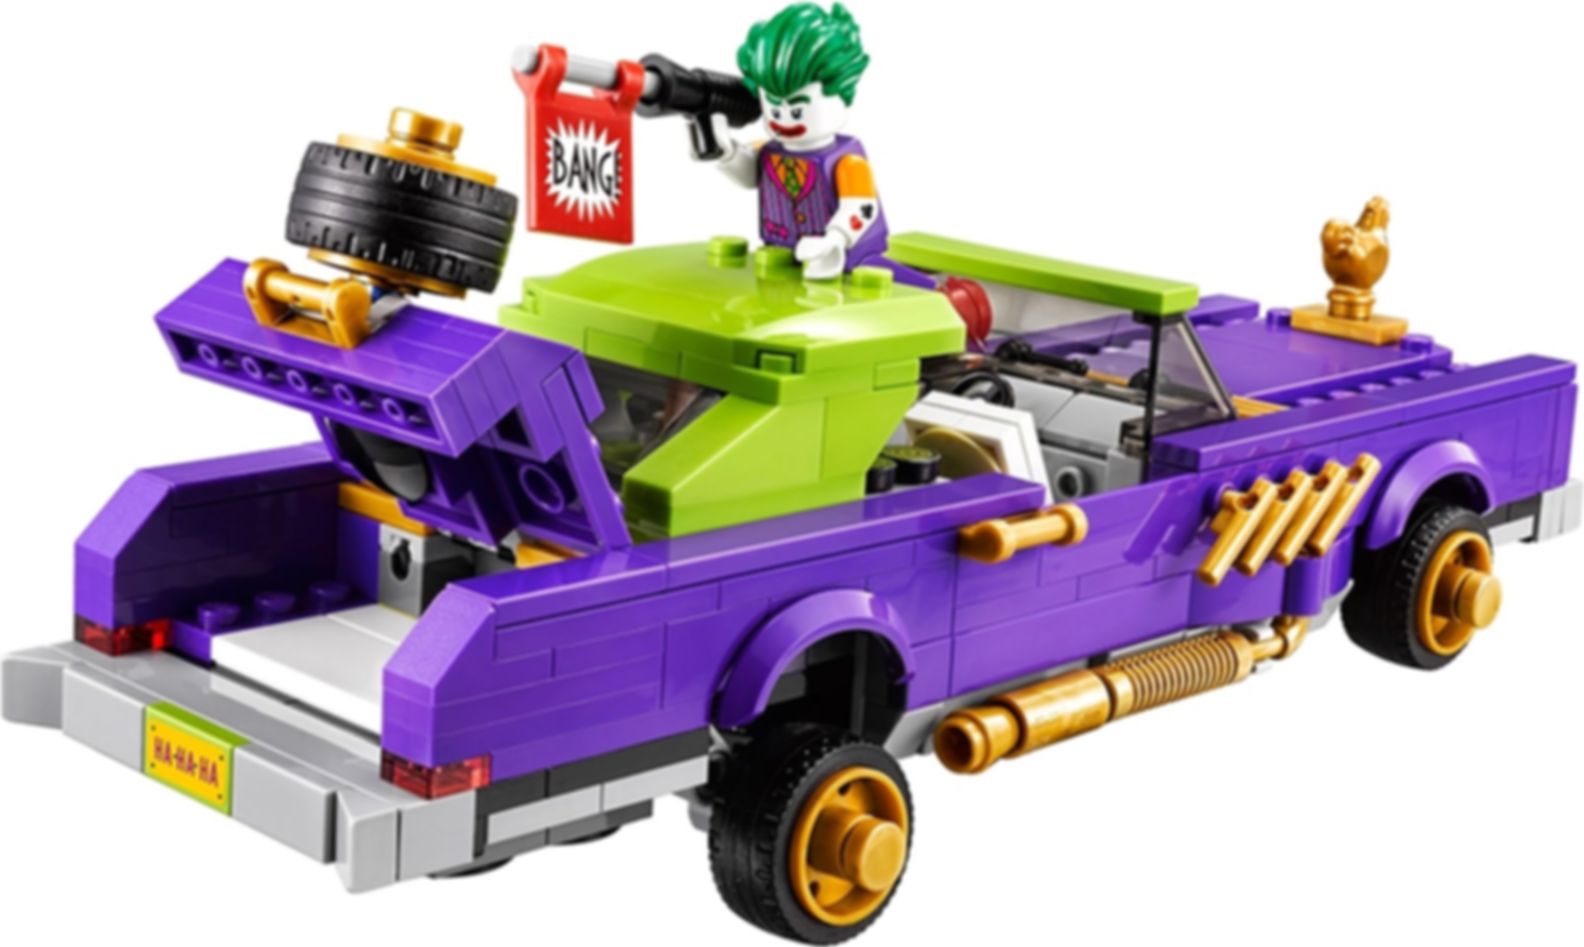 LEGO® Batman Movie The Joker™ duistere low-rider speelwijze